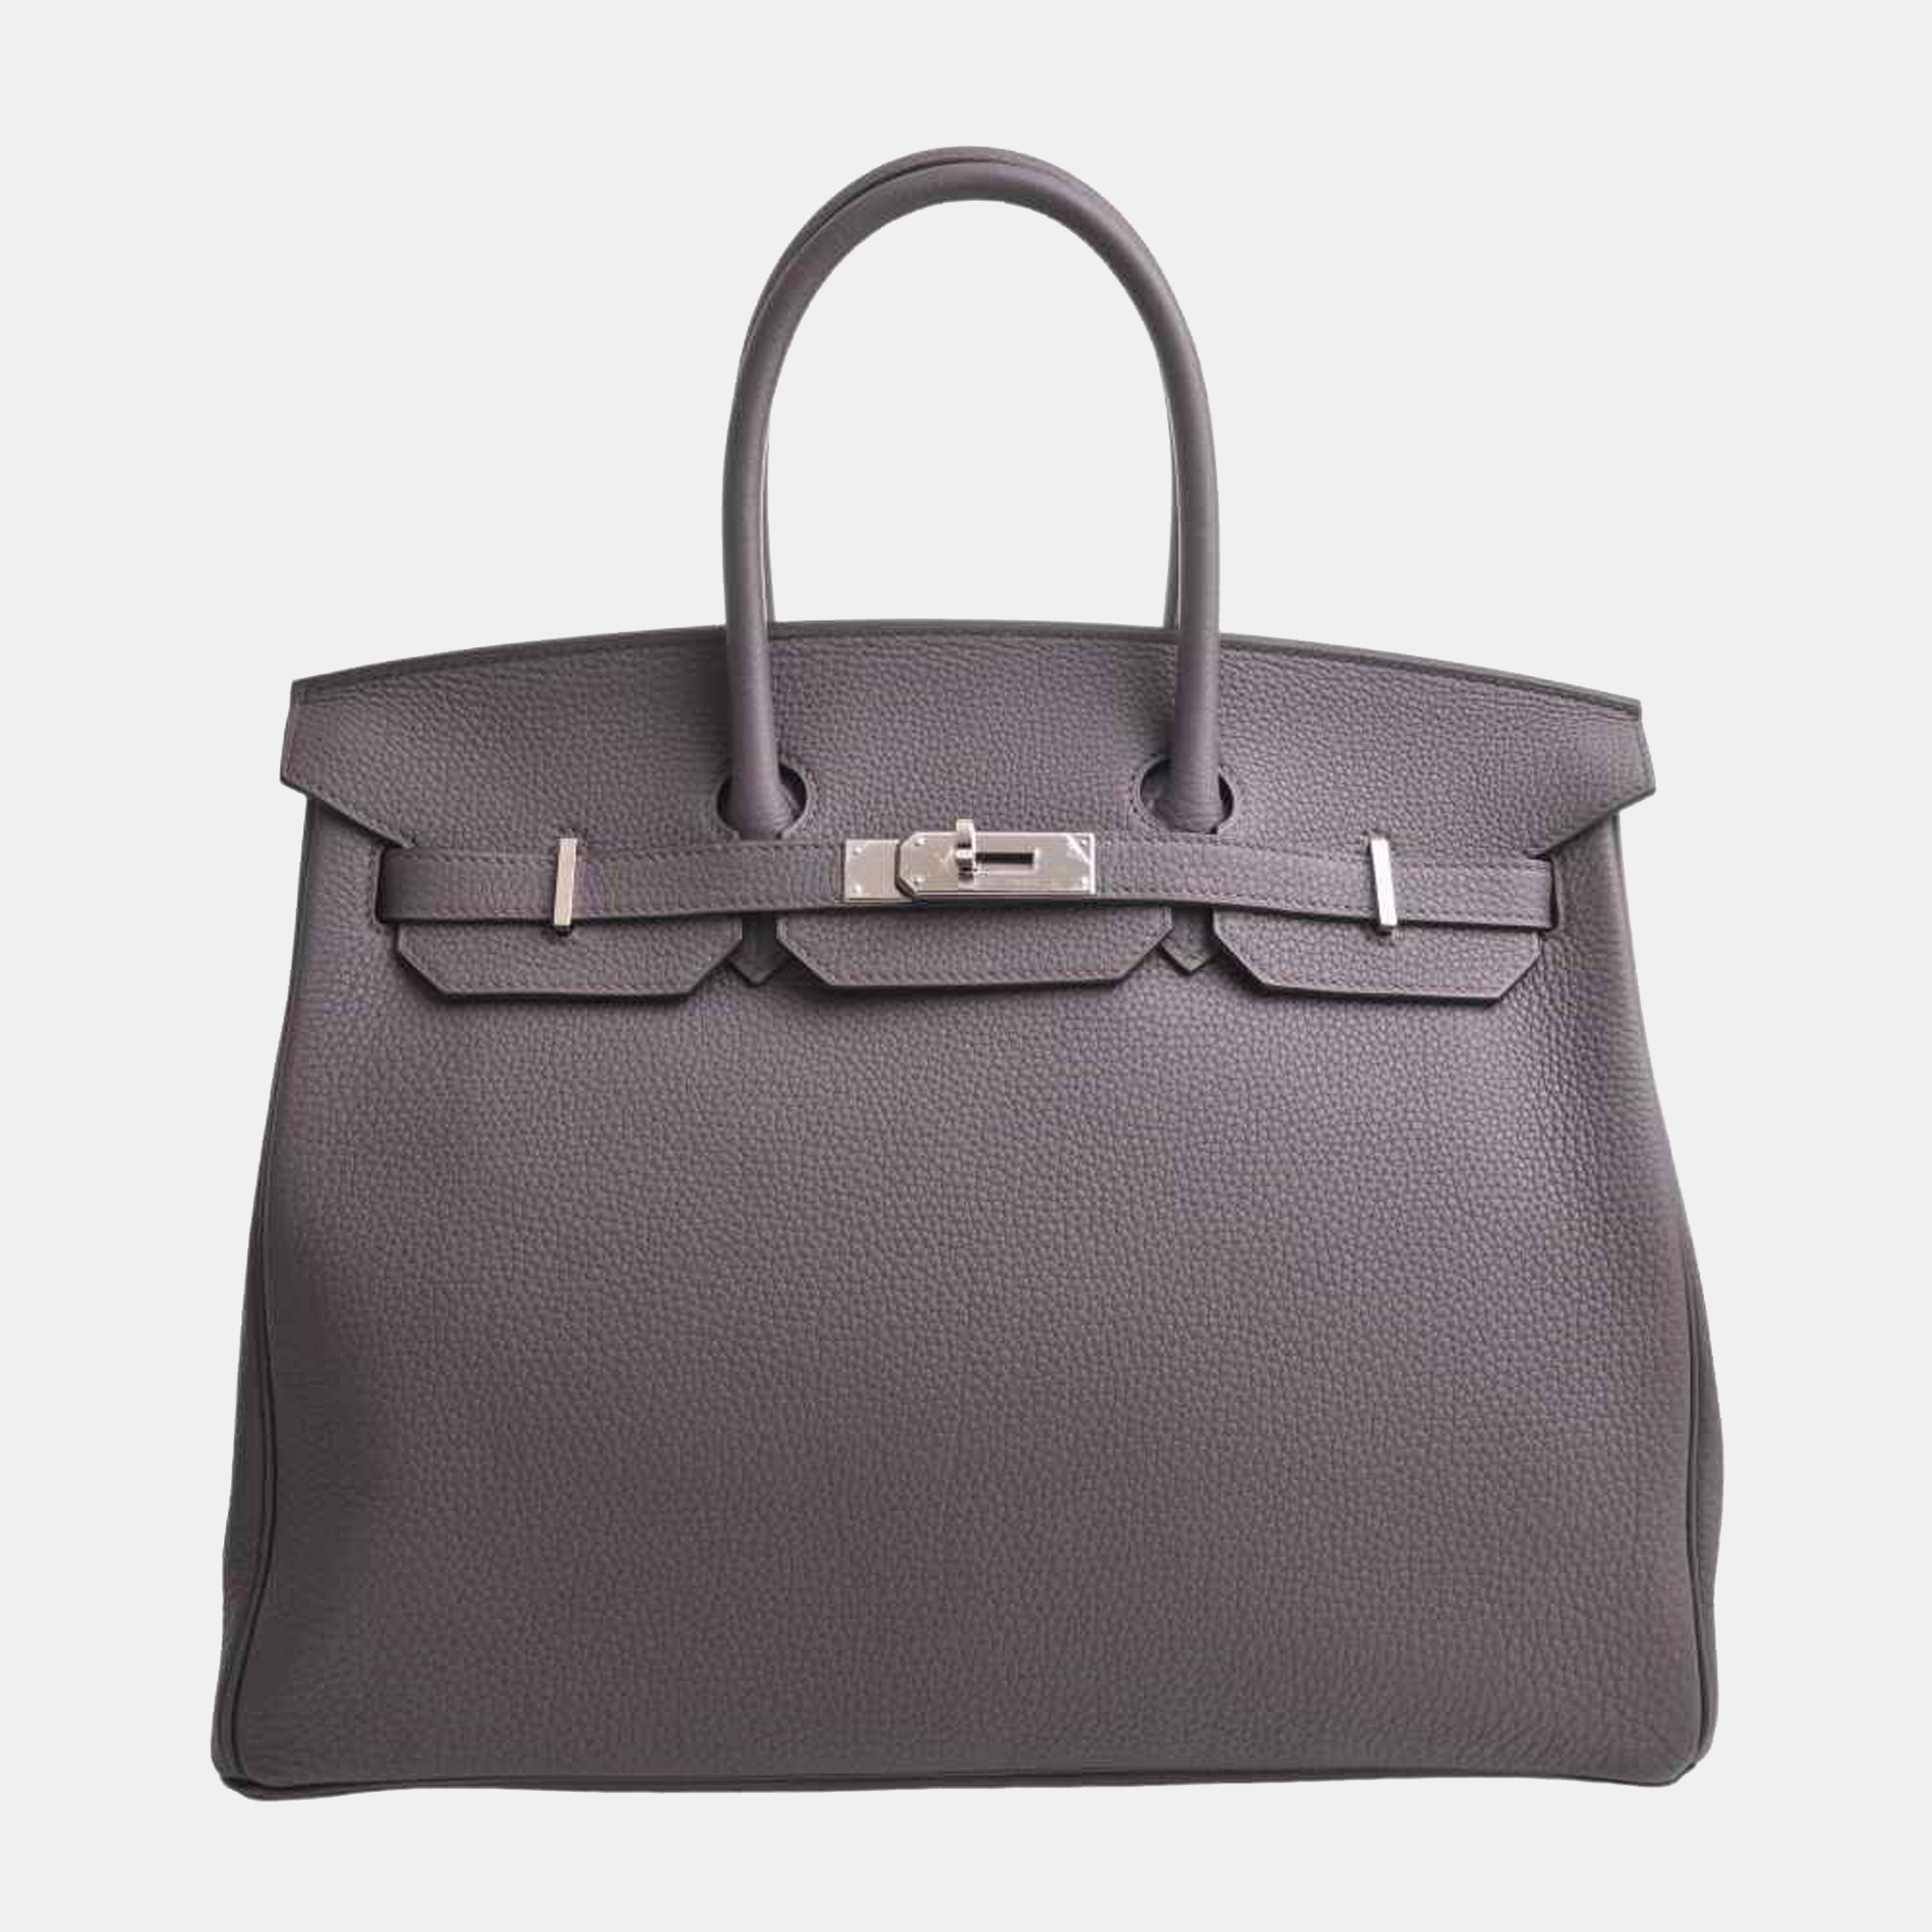 Hermes Togo Birkin 35 Handbag - Grey